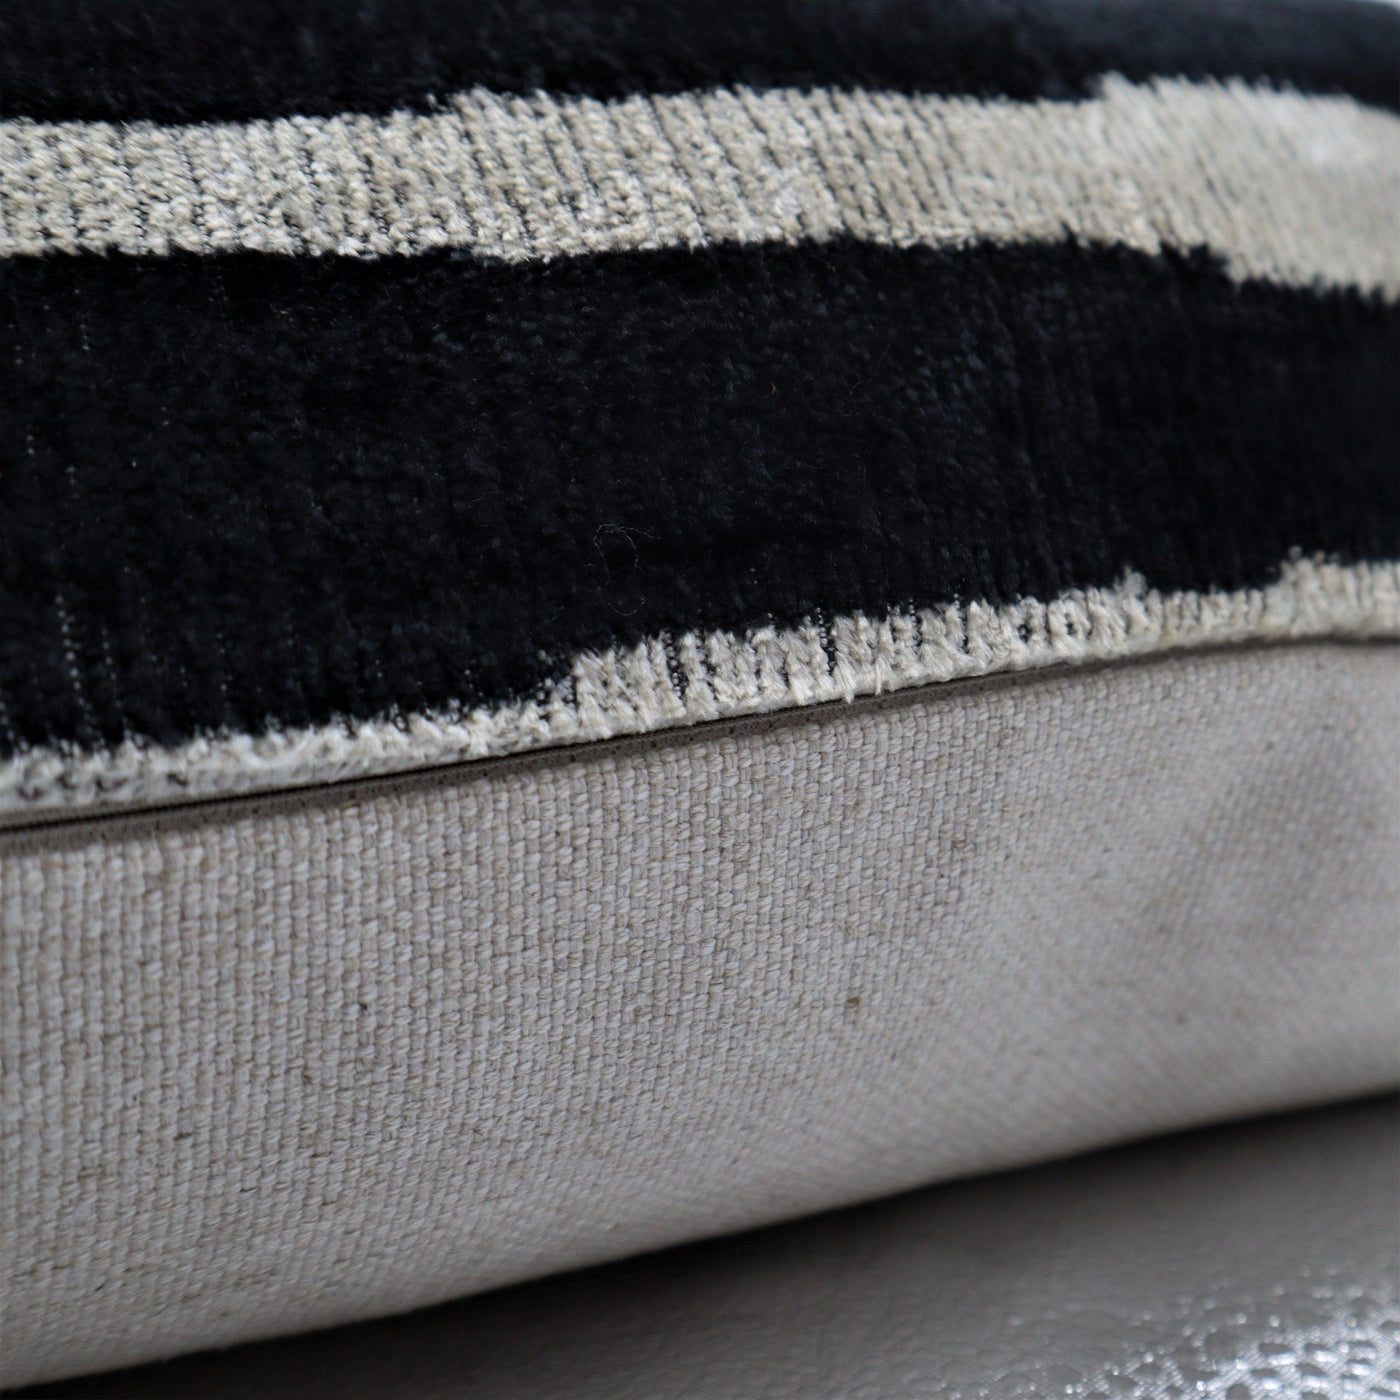 Canvello Handmade Black Decorative Pillows | 16x24